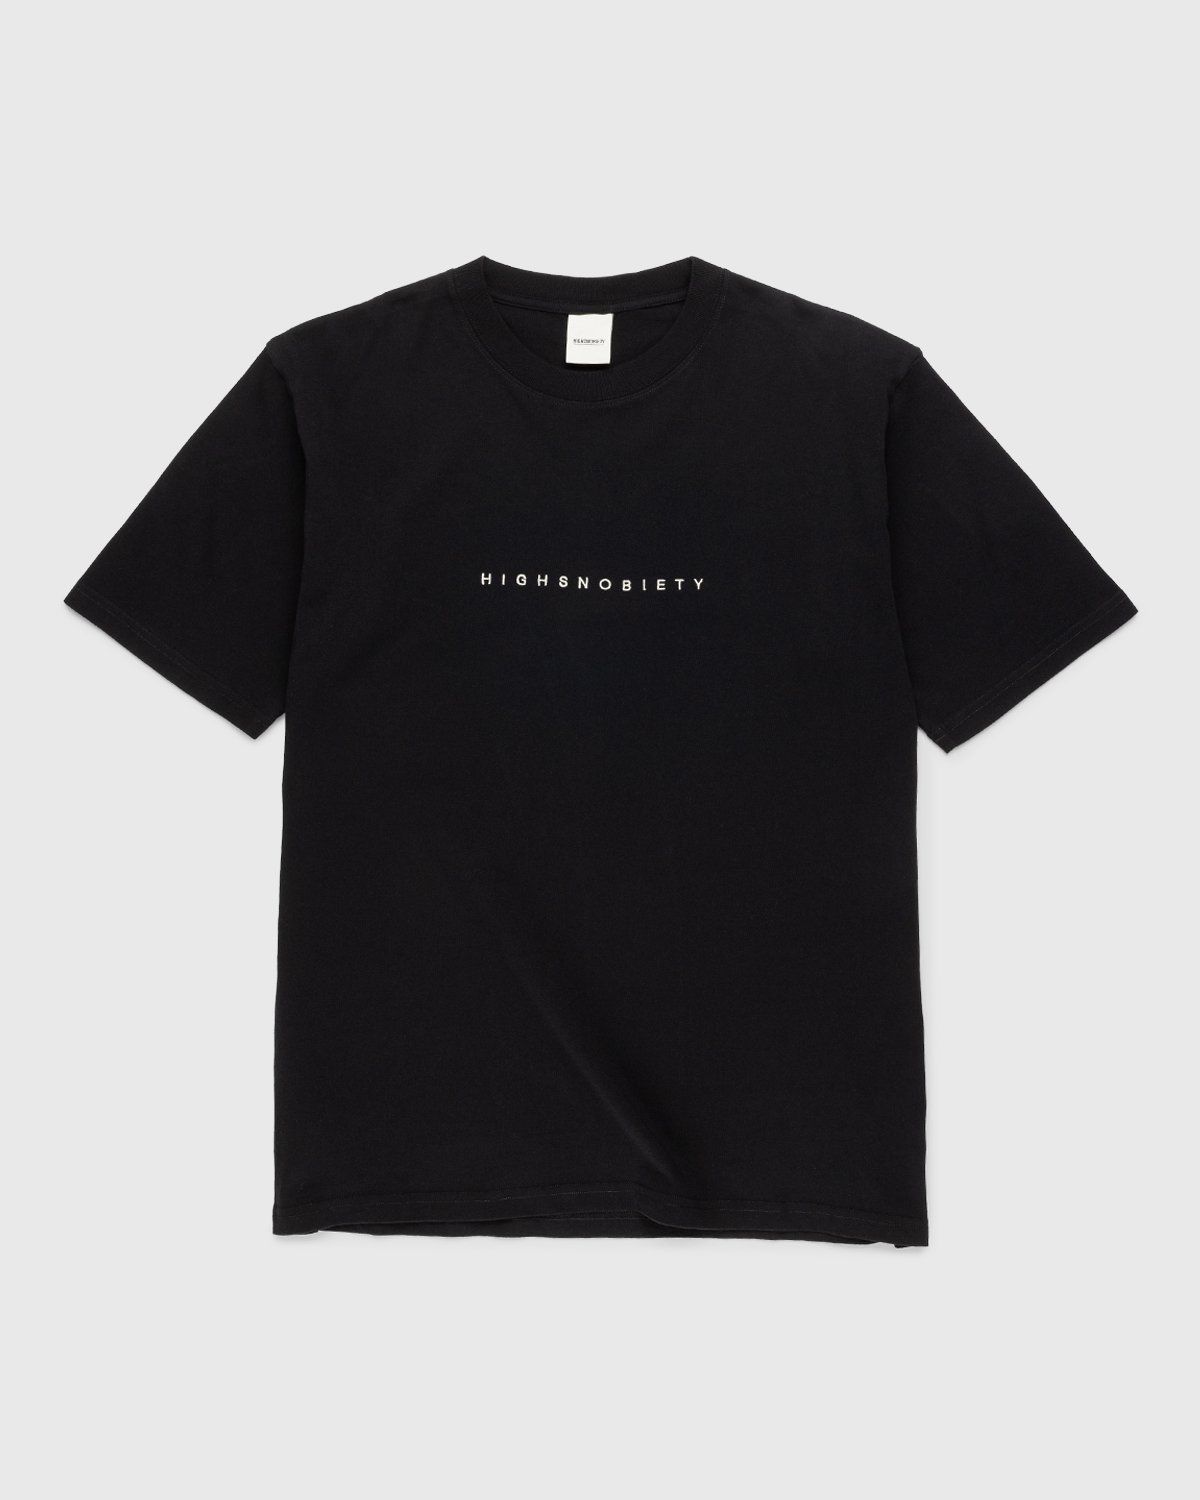 Highsnobiety – Staples T-Shirt Black - T-shirts - Black - Image 1